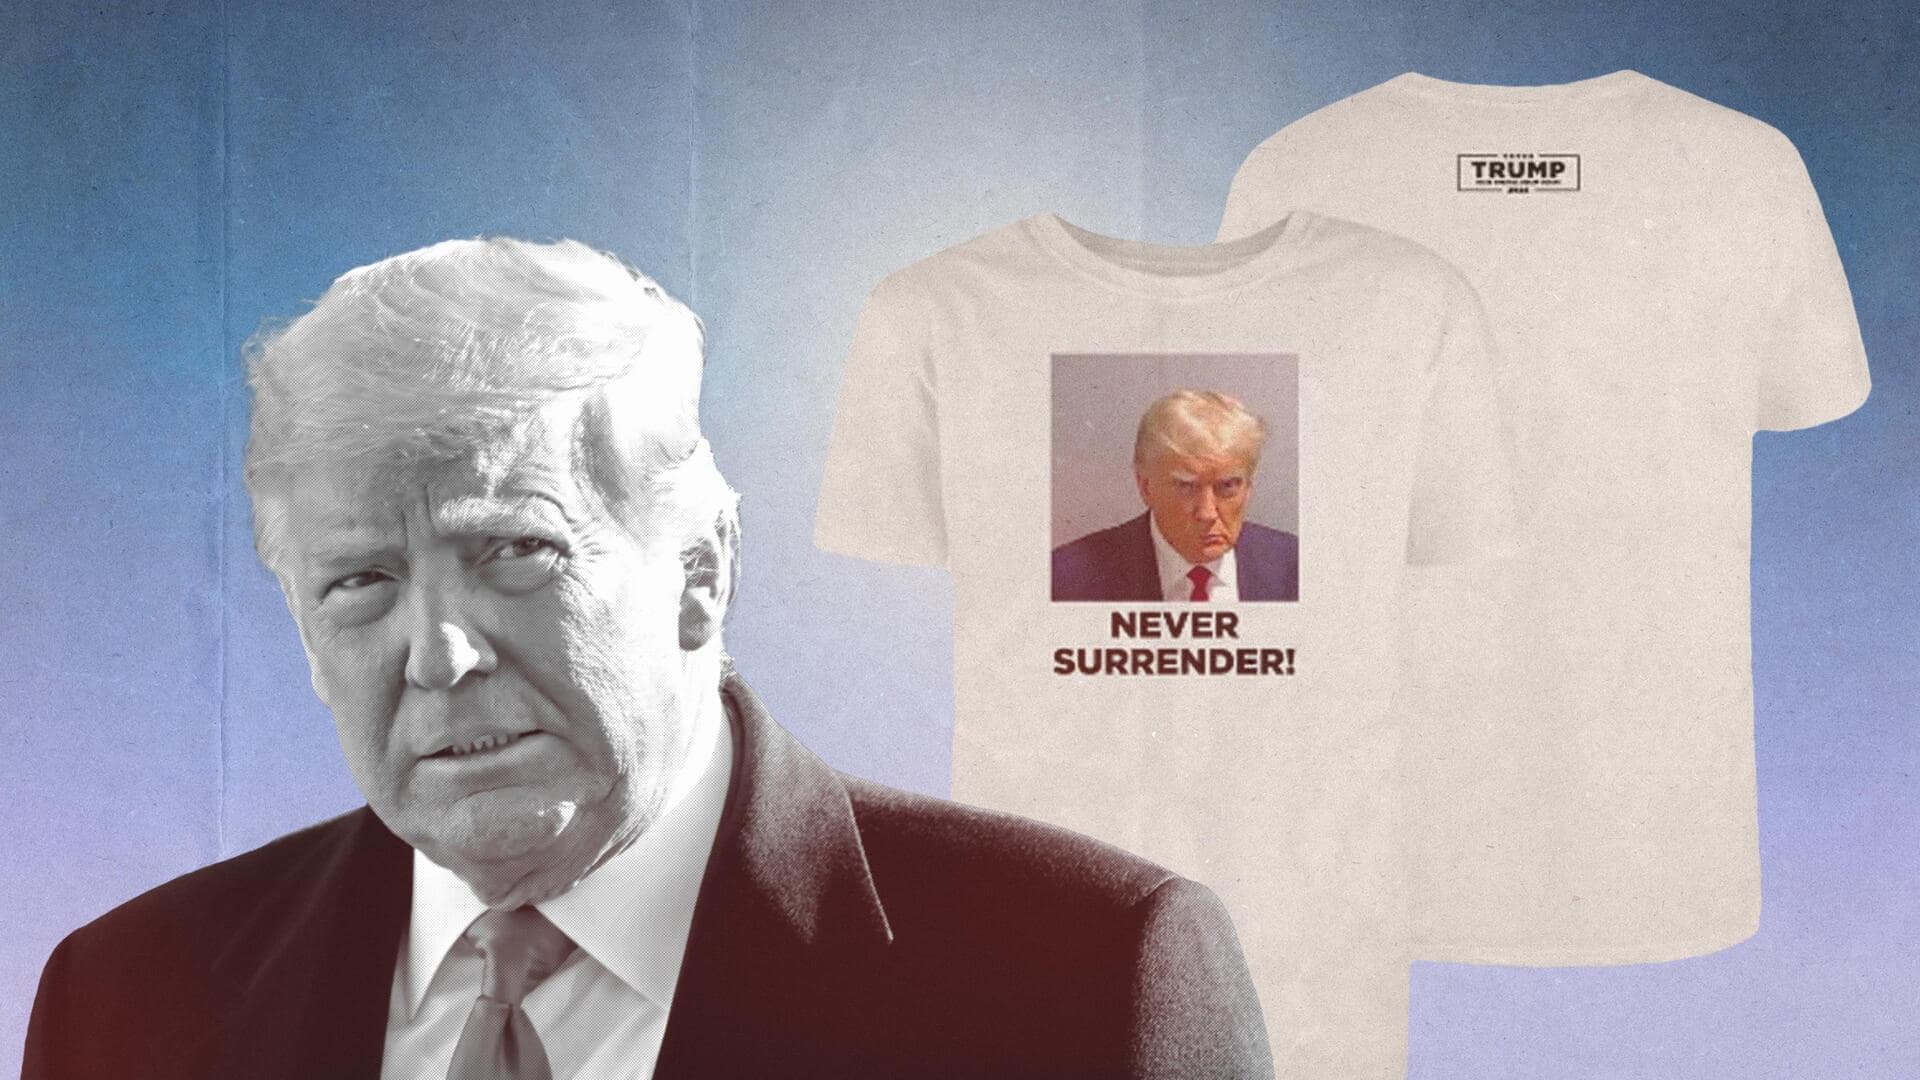 Trump's website already selling his criminal mugshot merchandise